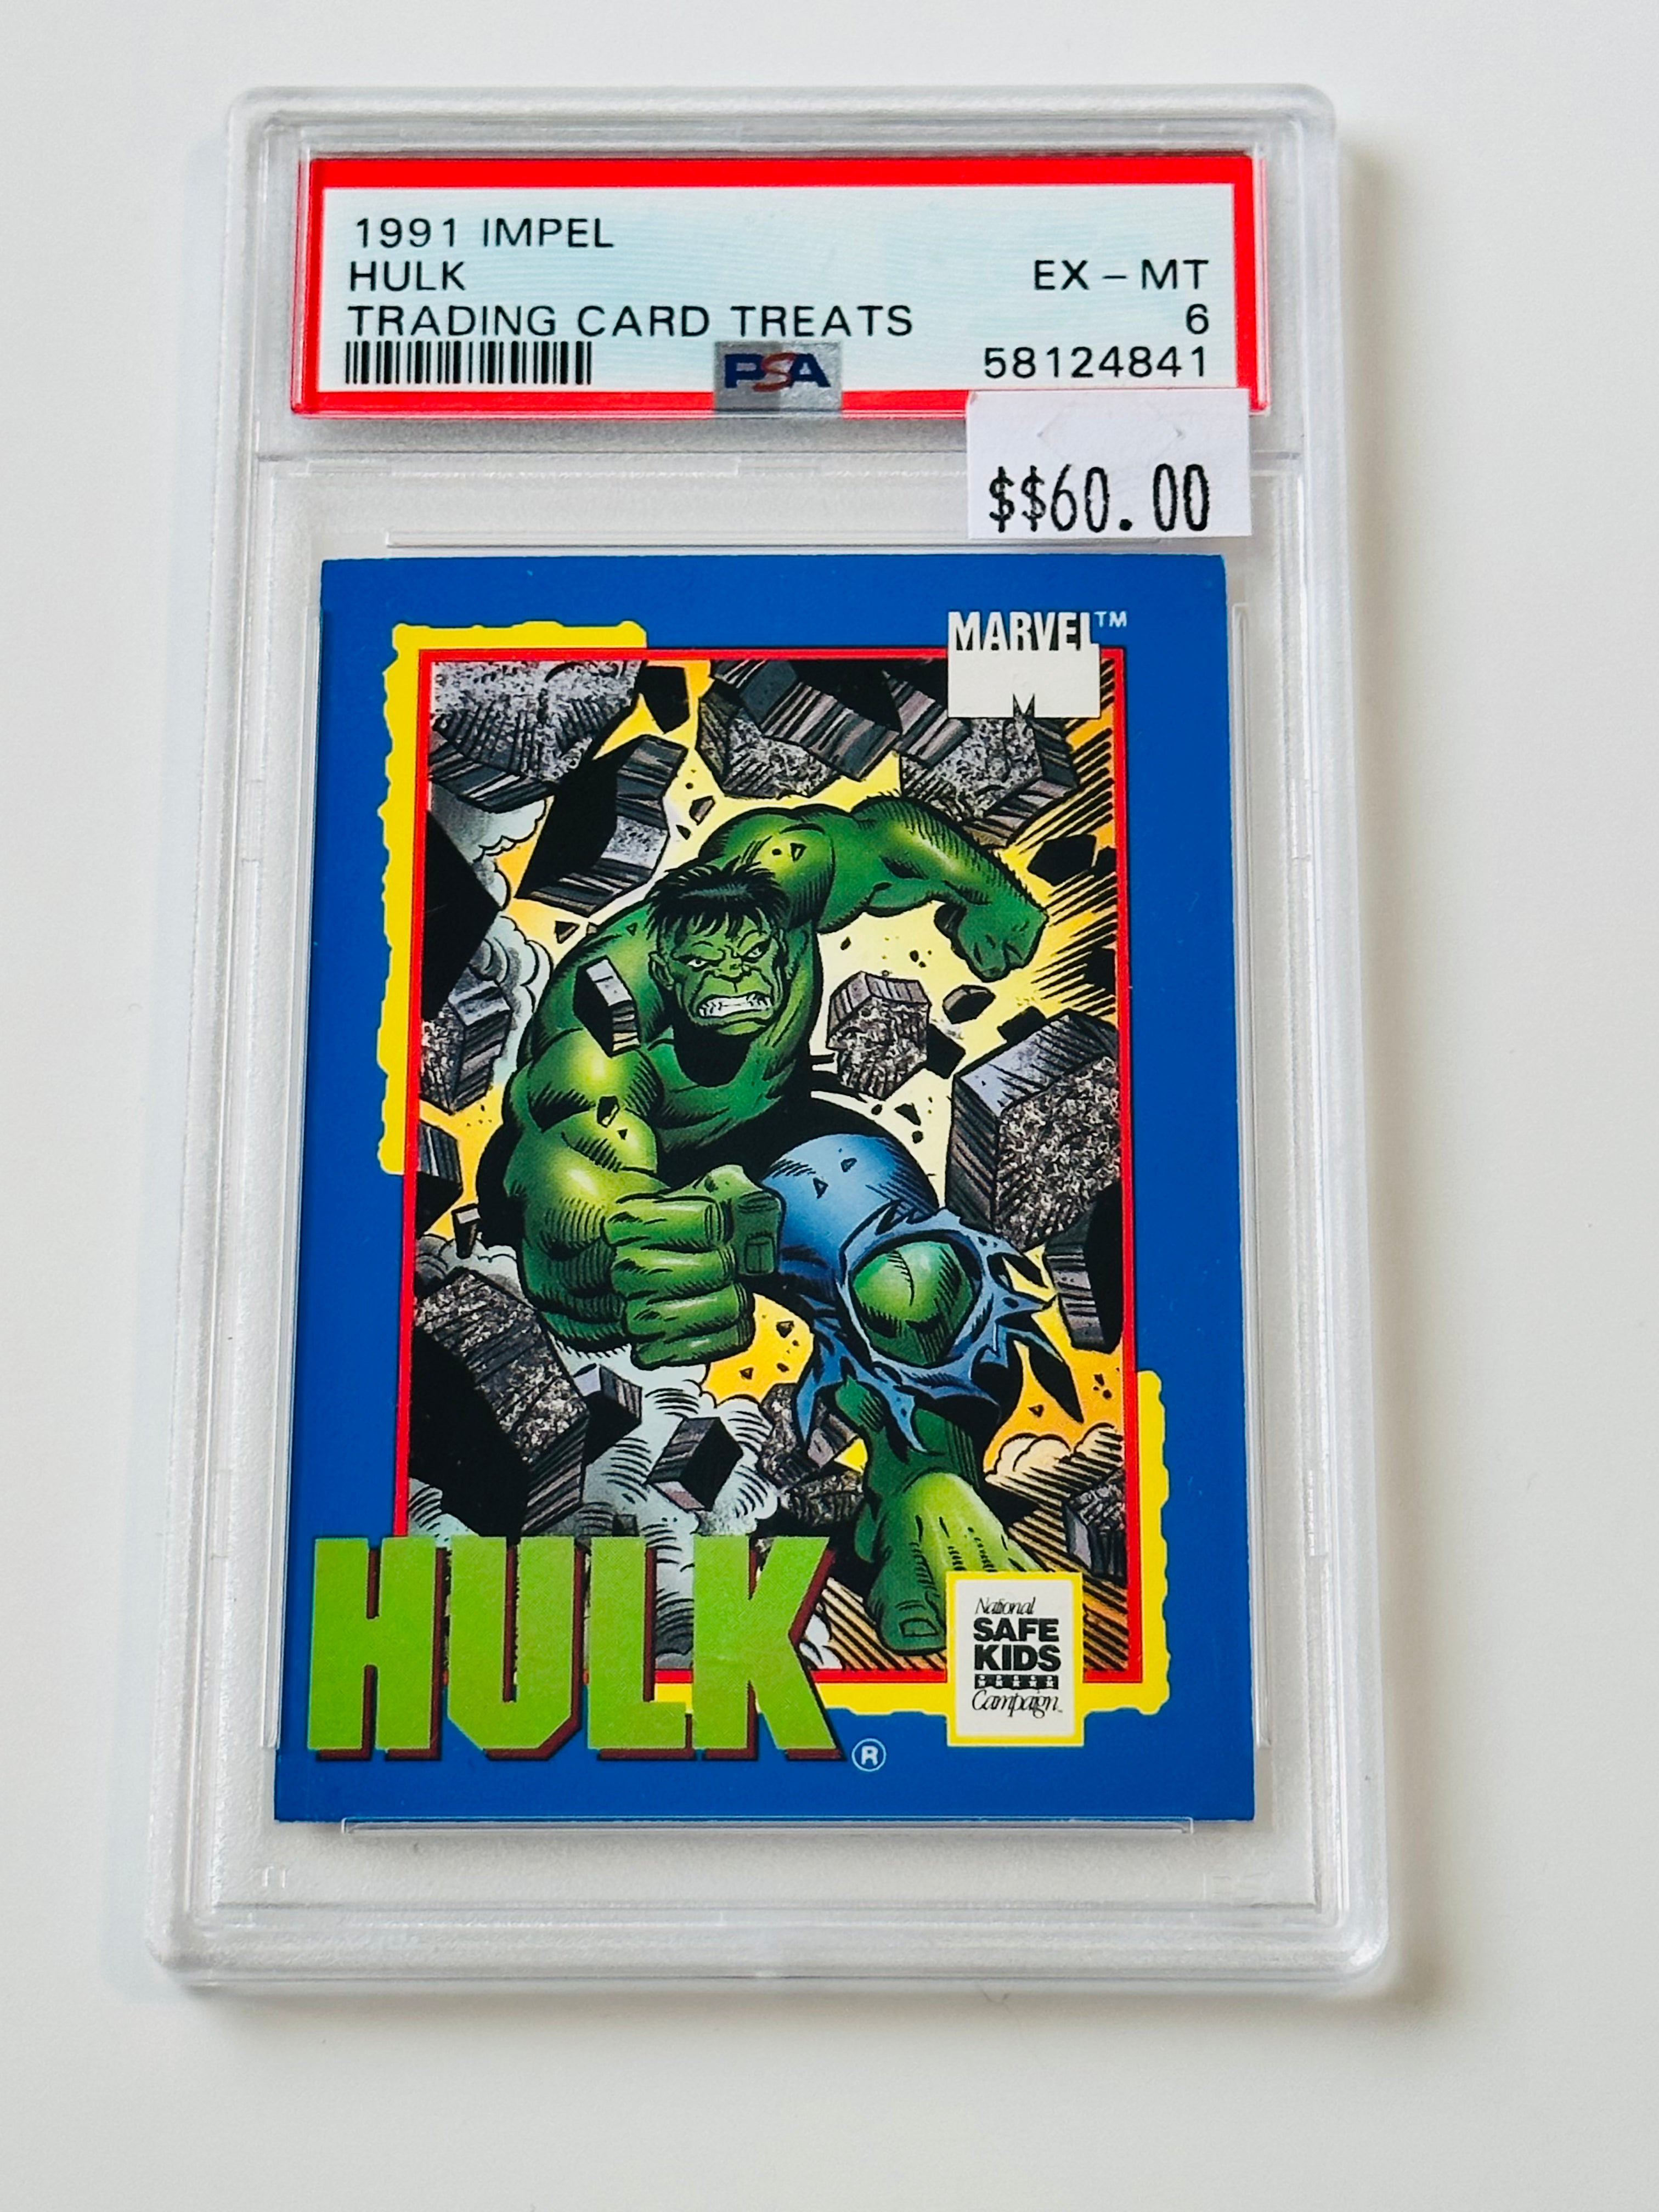 Hulk comics Treats rare limited issued trading card 1991.